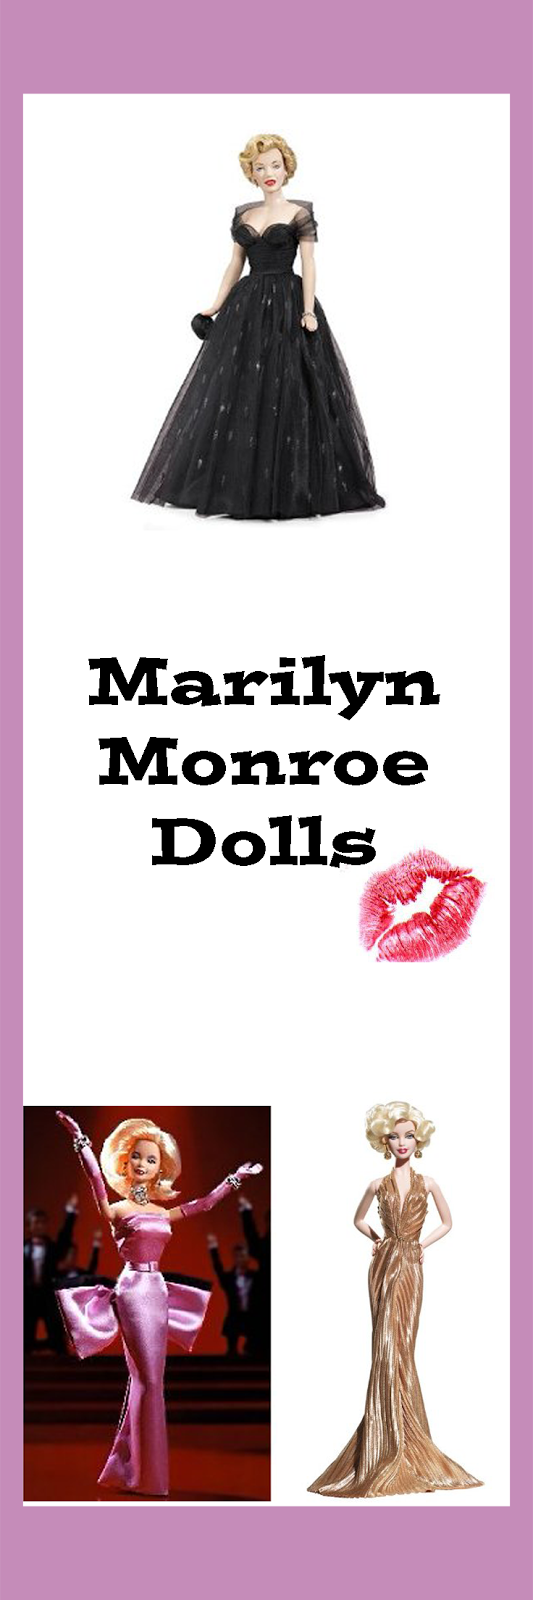 Marilyn Monroe Collectible Dolls